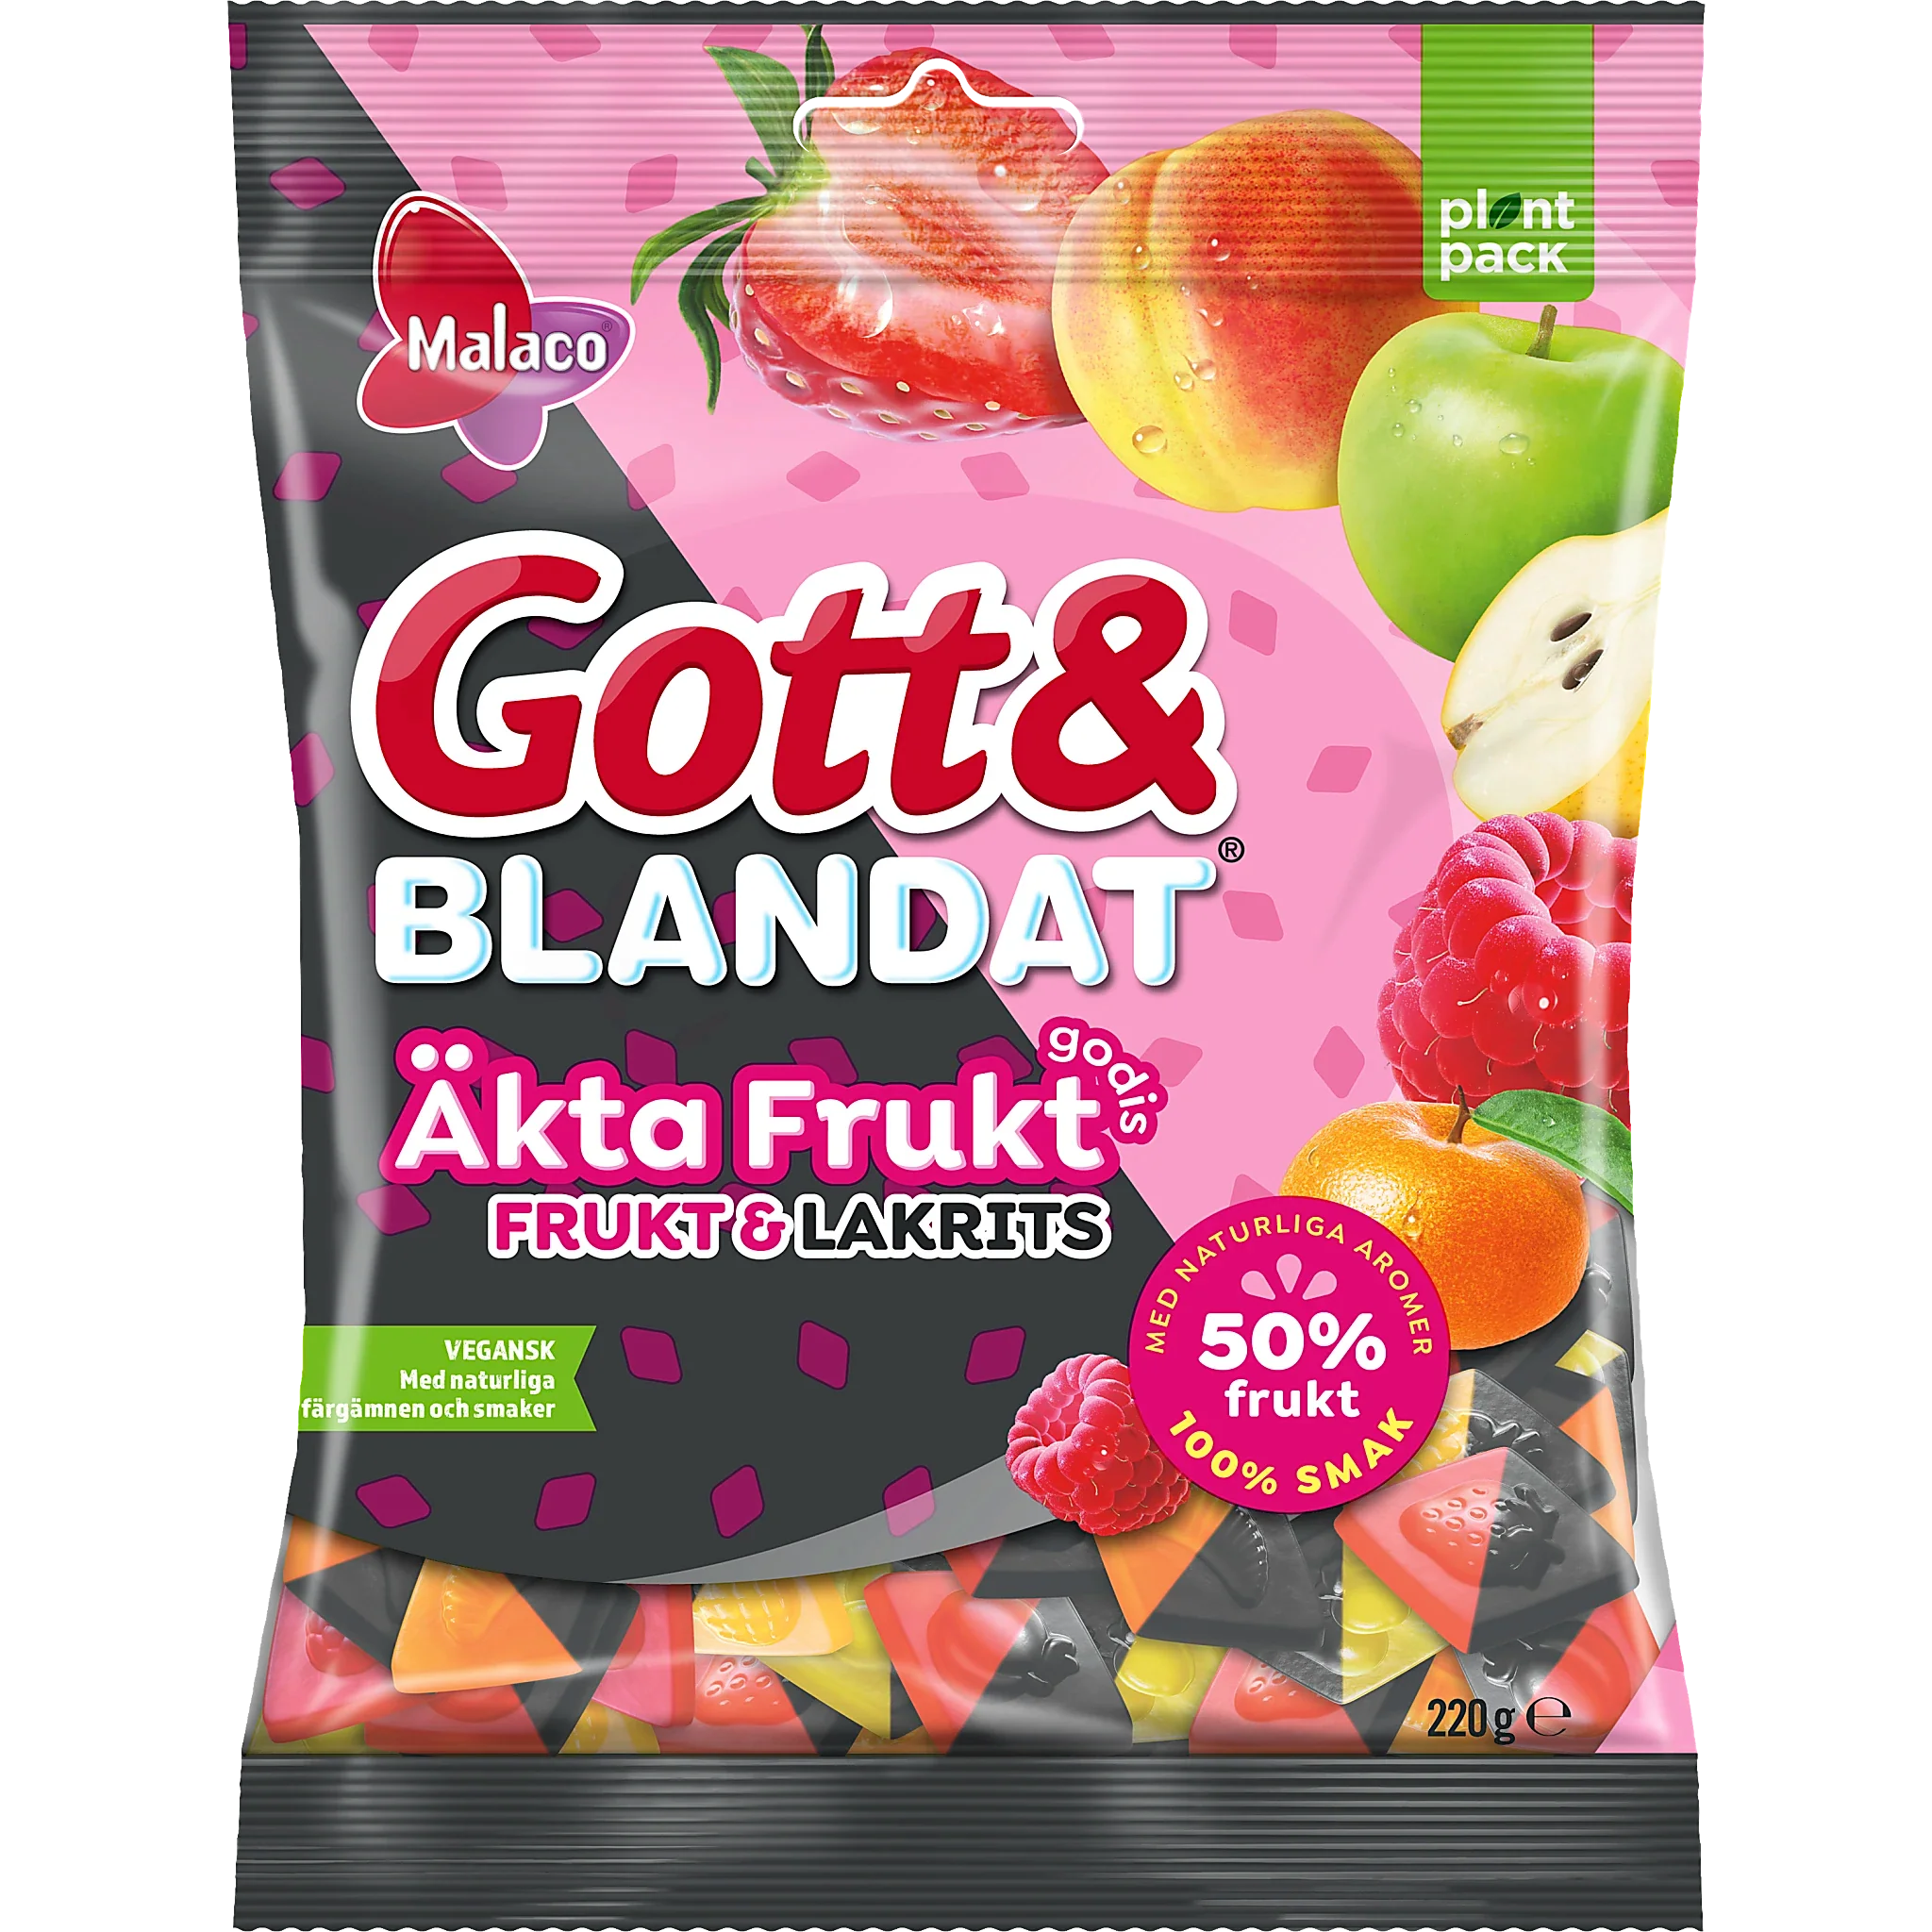 Malaco Gott & Blandat "Real Fruit-Candy" Fruit & Licorice by Swedish Candy Store